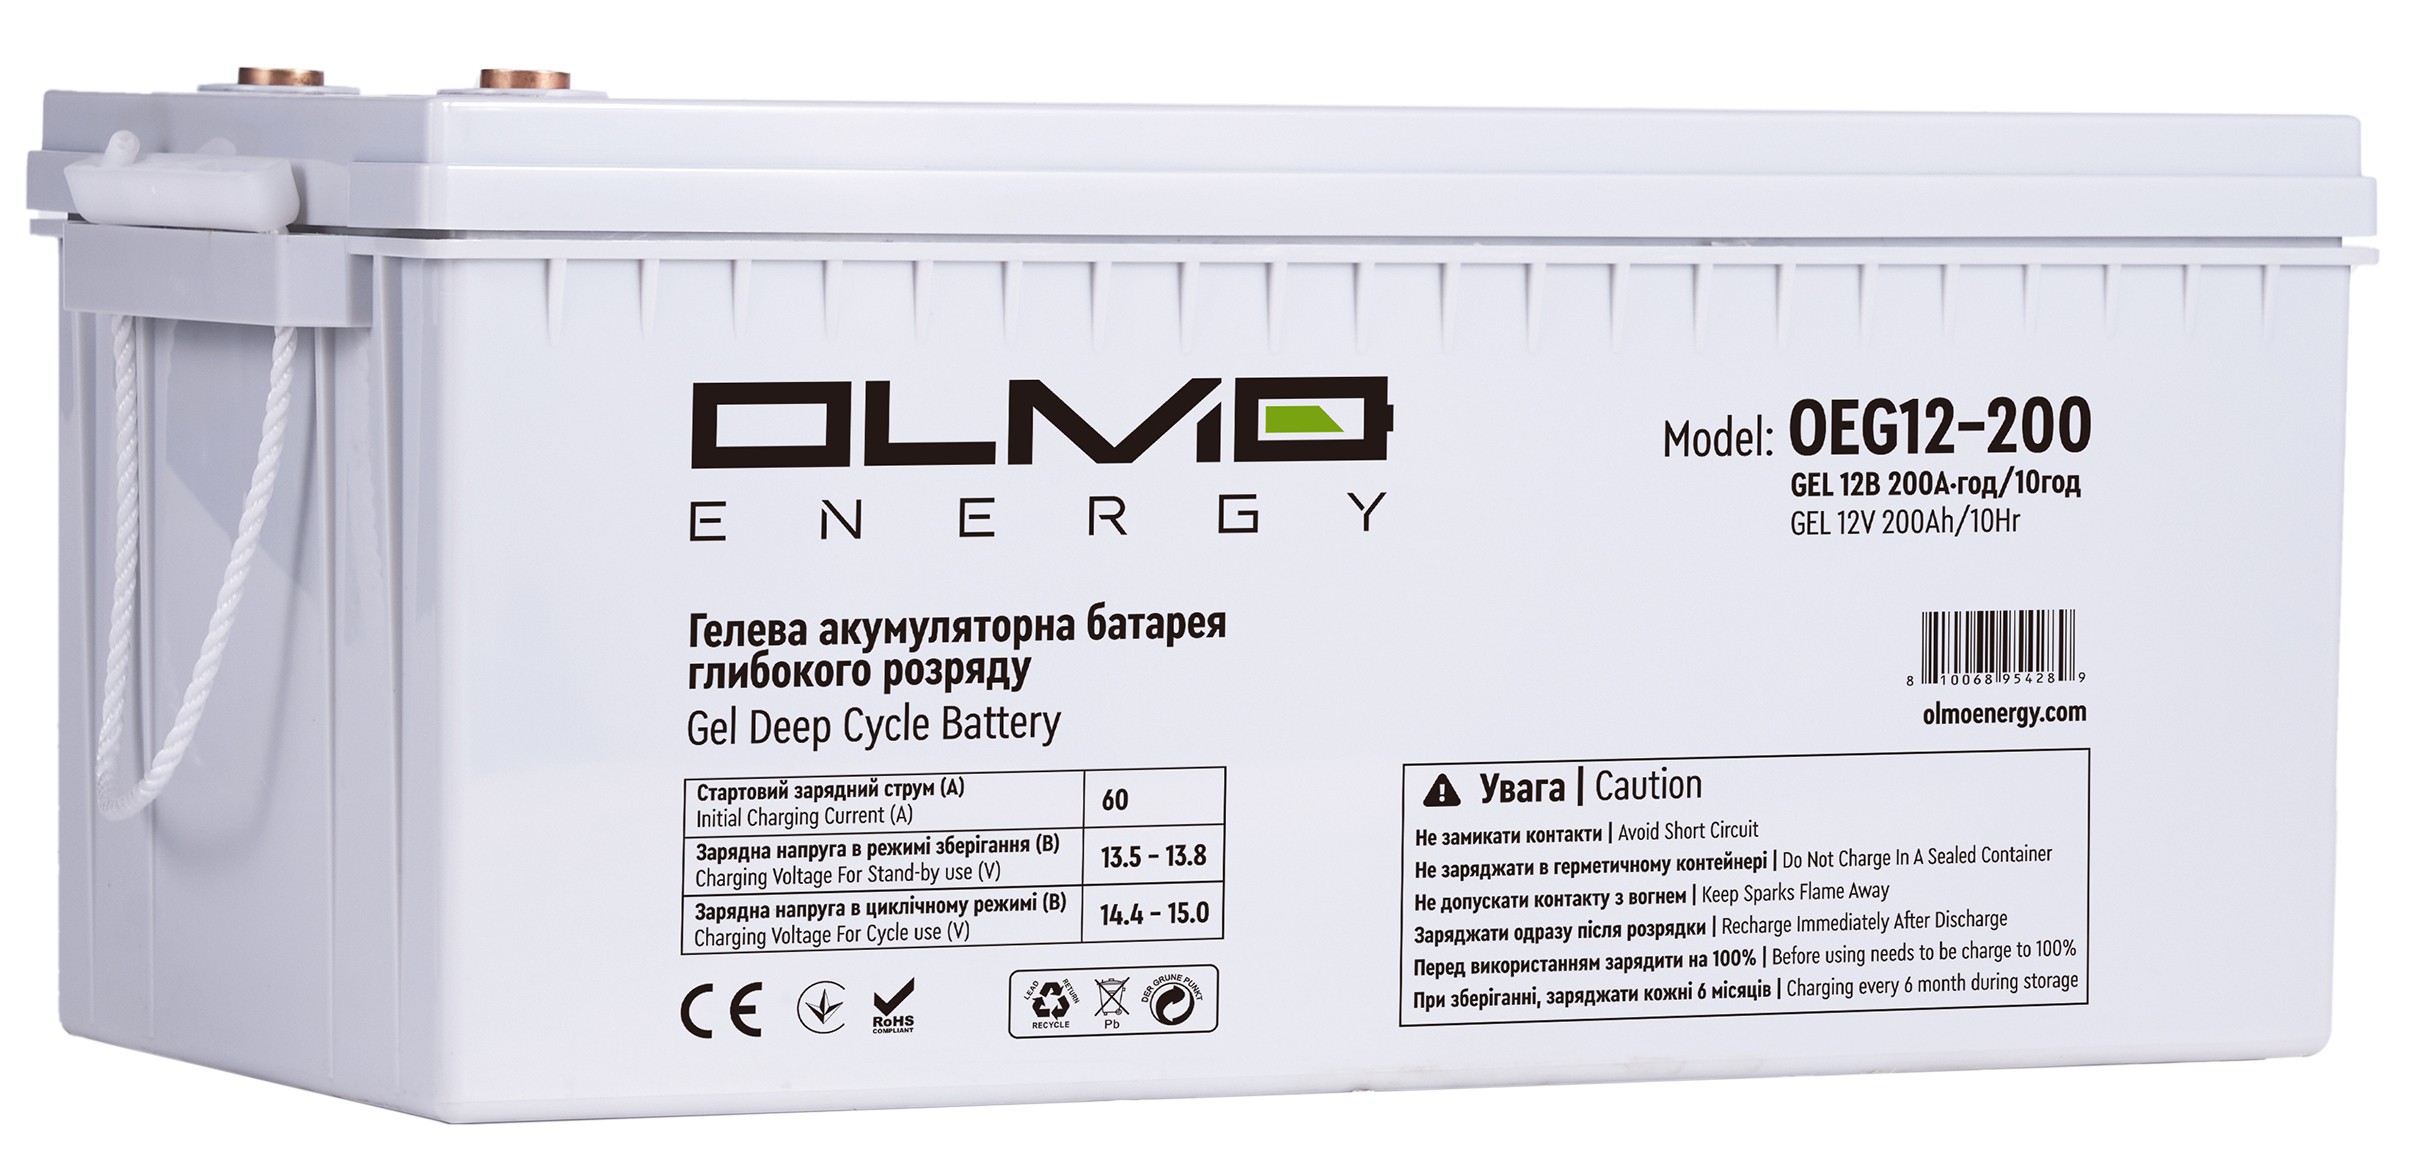 Цена аккумуляторная батарея OLMO Energy OEG12-200 в Киеве